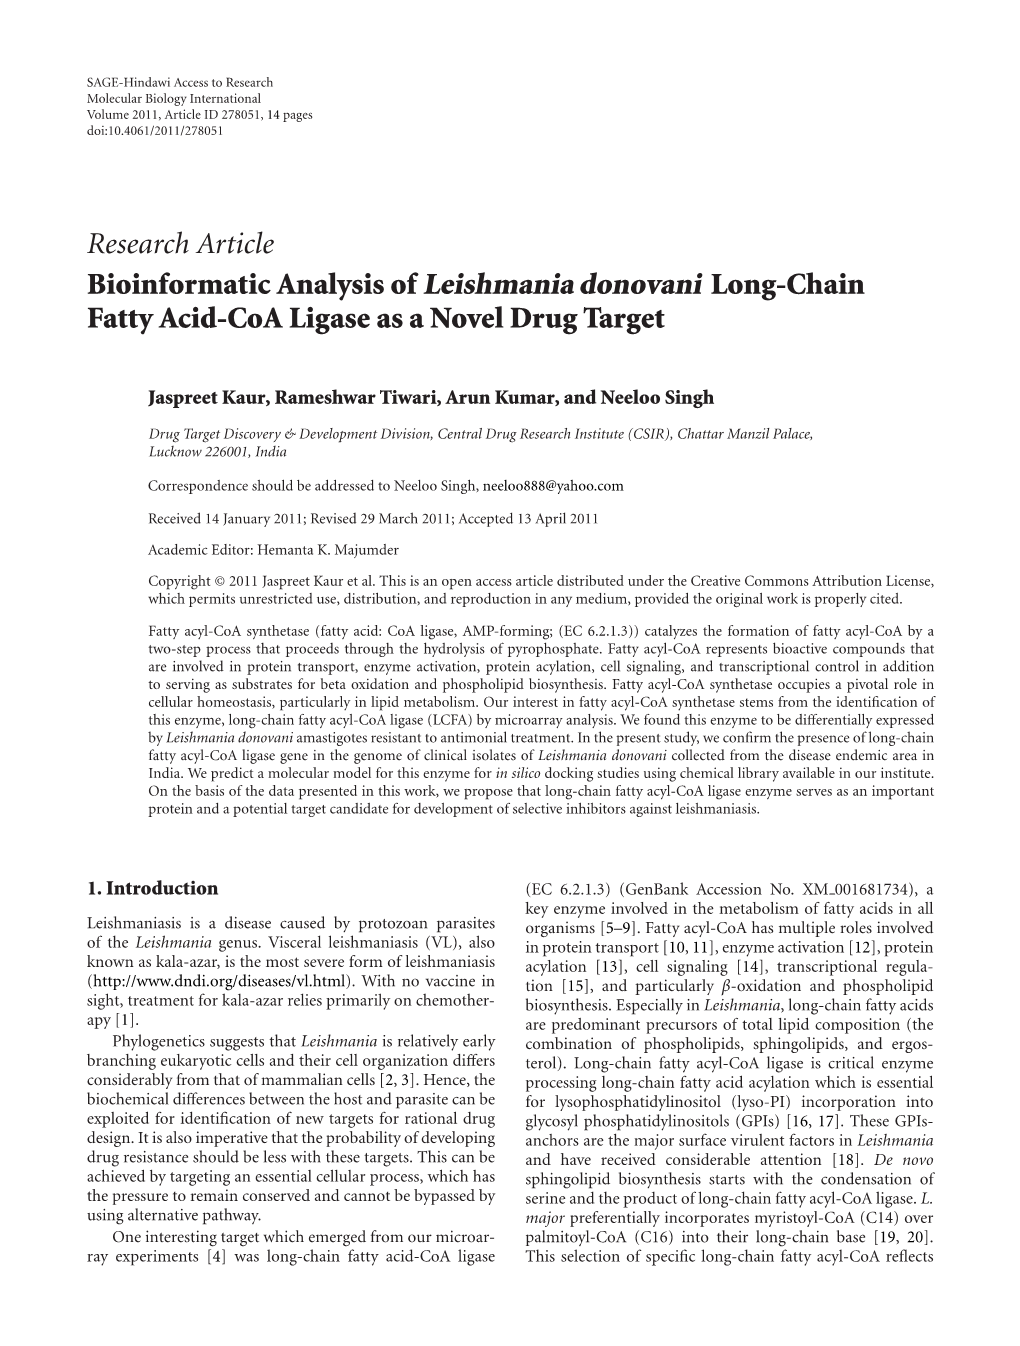 Bioinformatic Analysis of Leishmania Donovani Long-Chain Fatty Acid-Coa Ligase As a Novel Drug Target